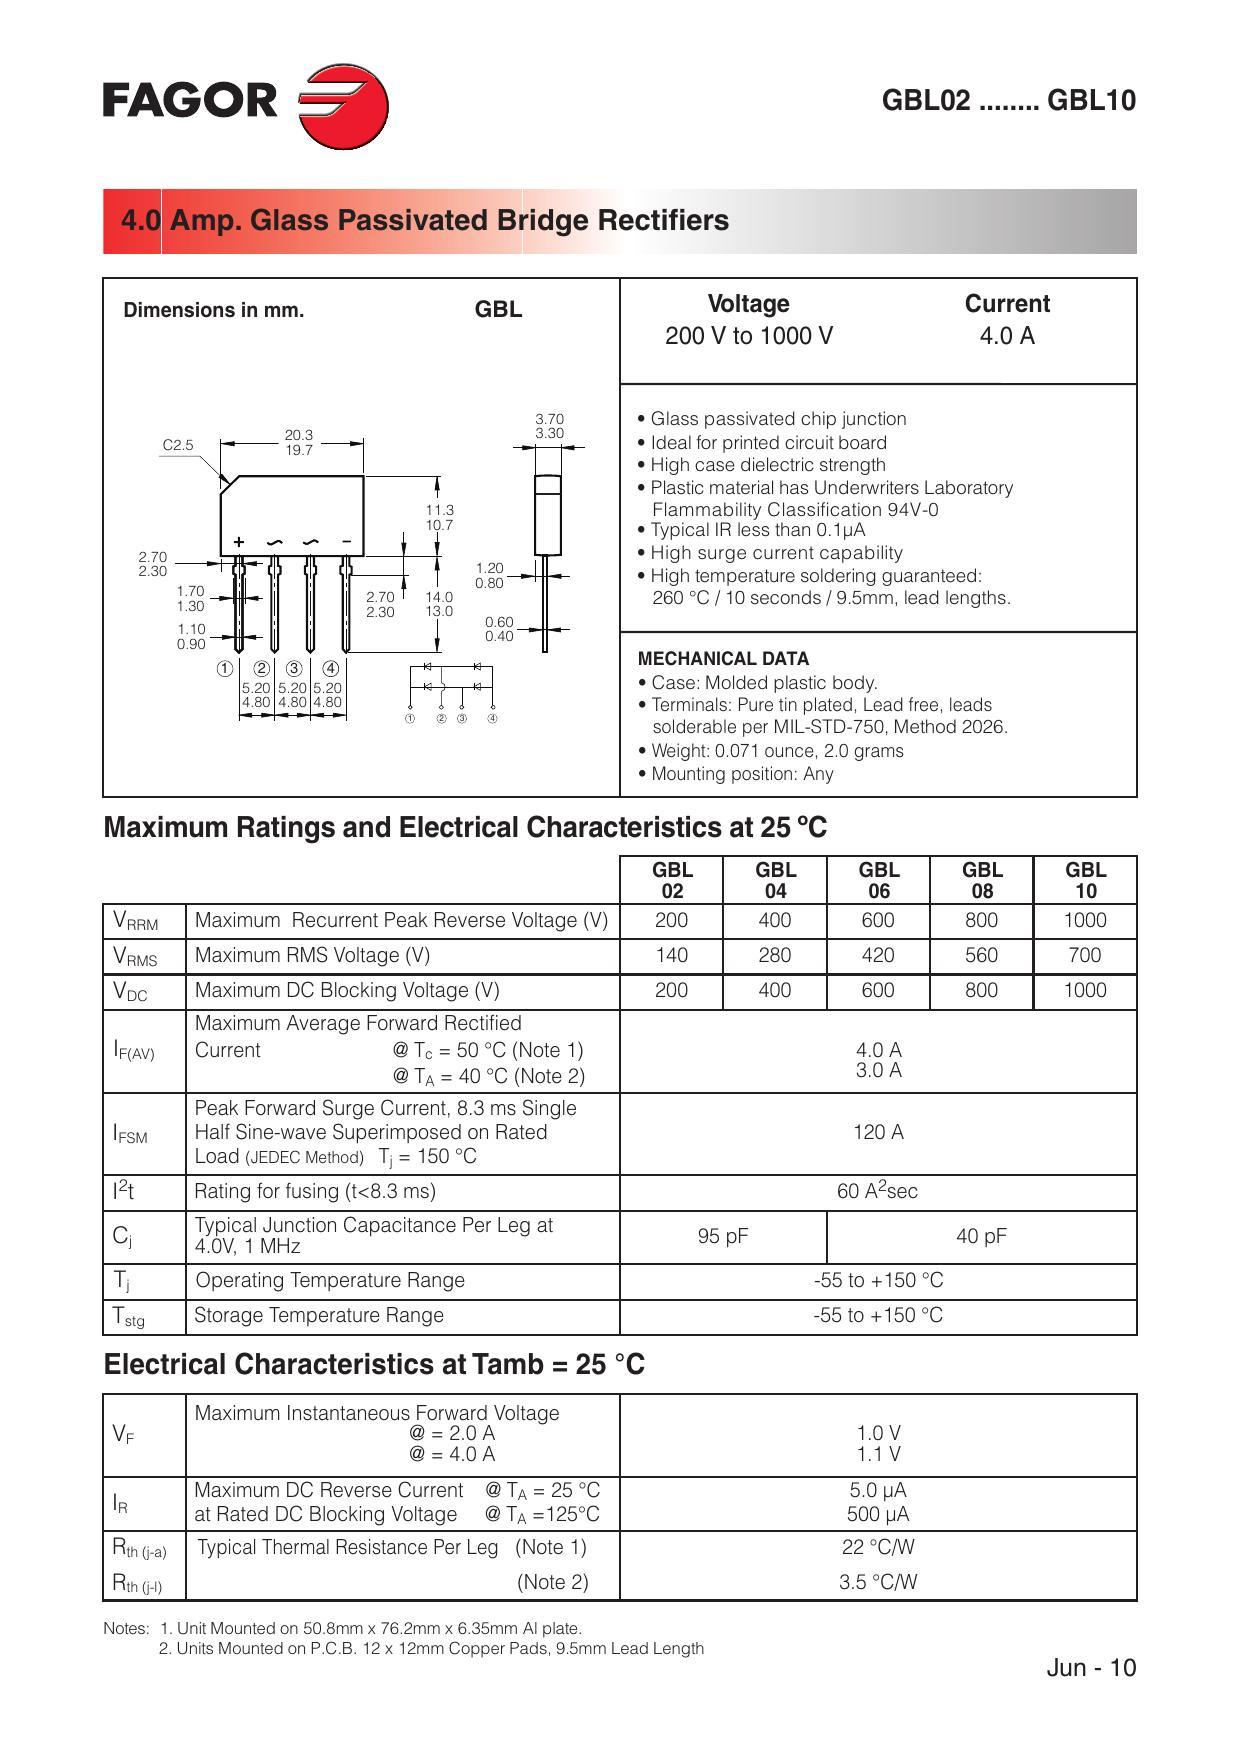 fagor-gbl-series-40-amp-glass-passivated-bridge-rectifiers.pdf